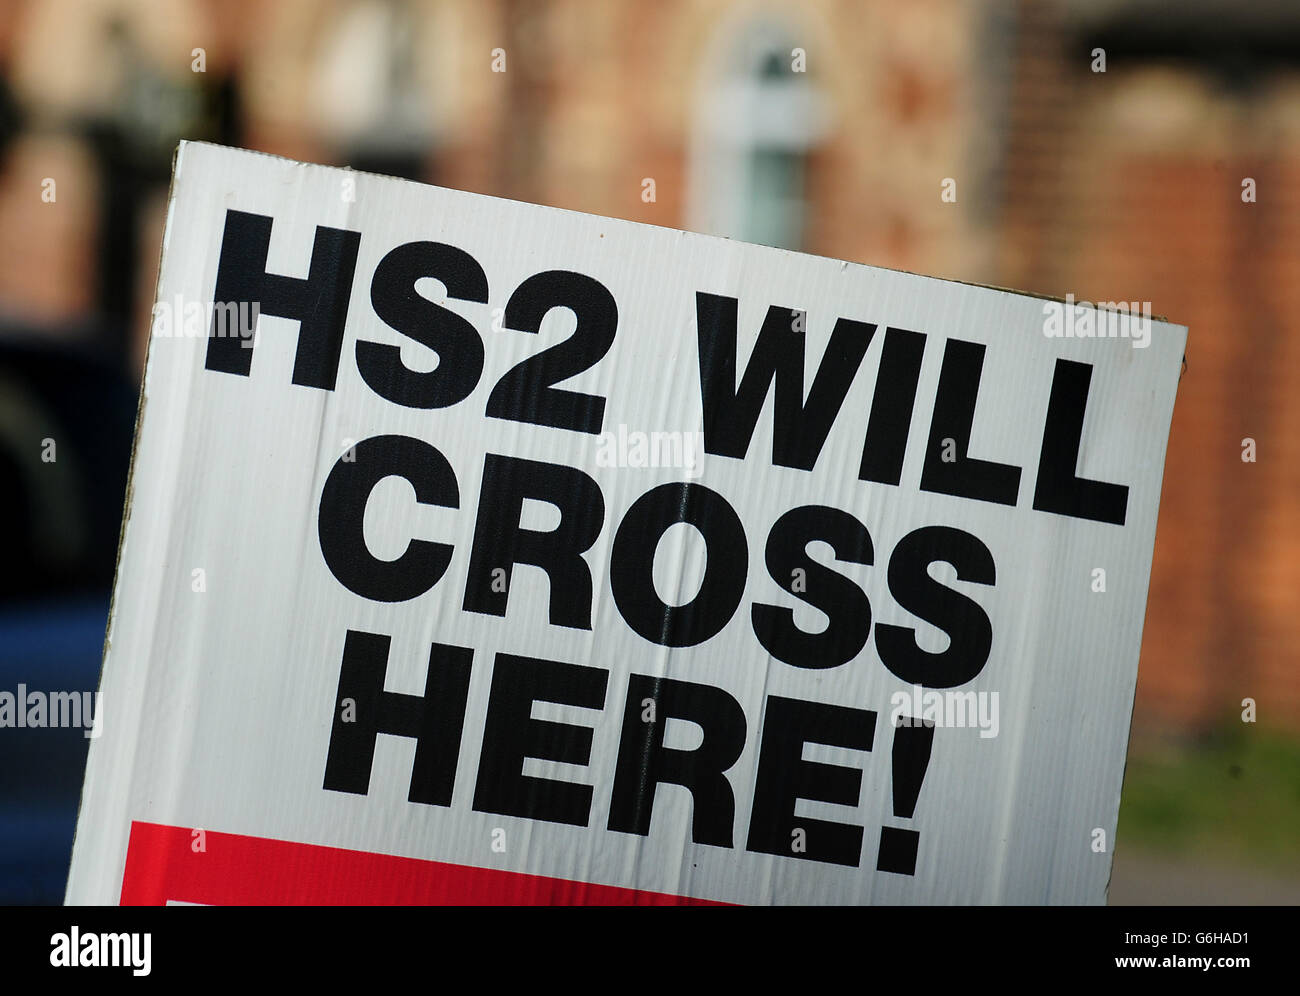 Una vista general de un signo anti HS2 en Whittington, Staffordshire. Foto de stock